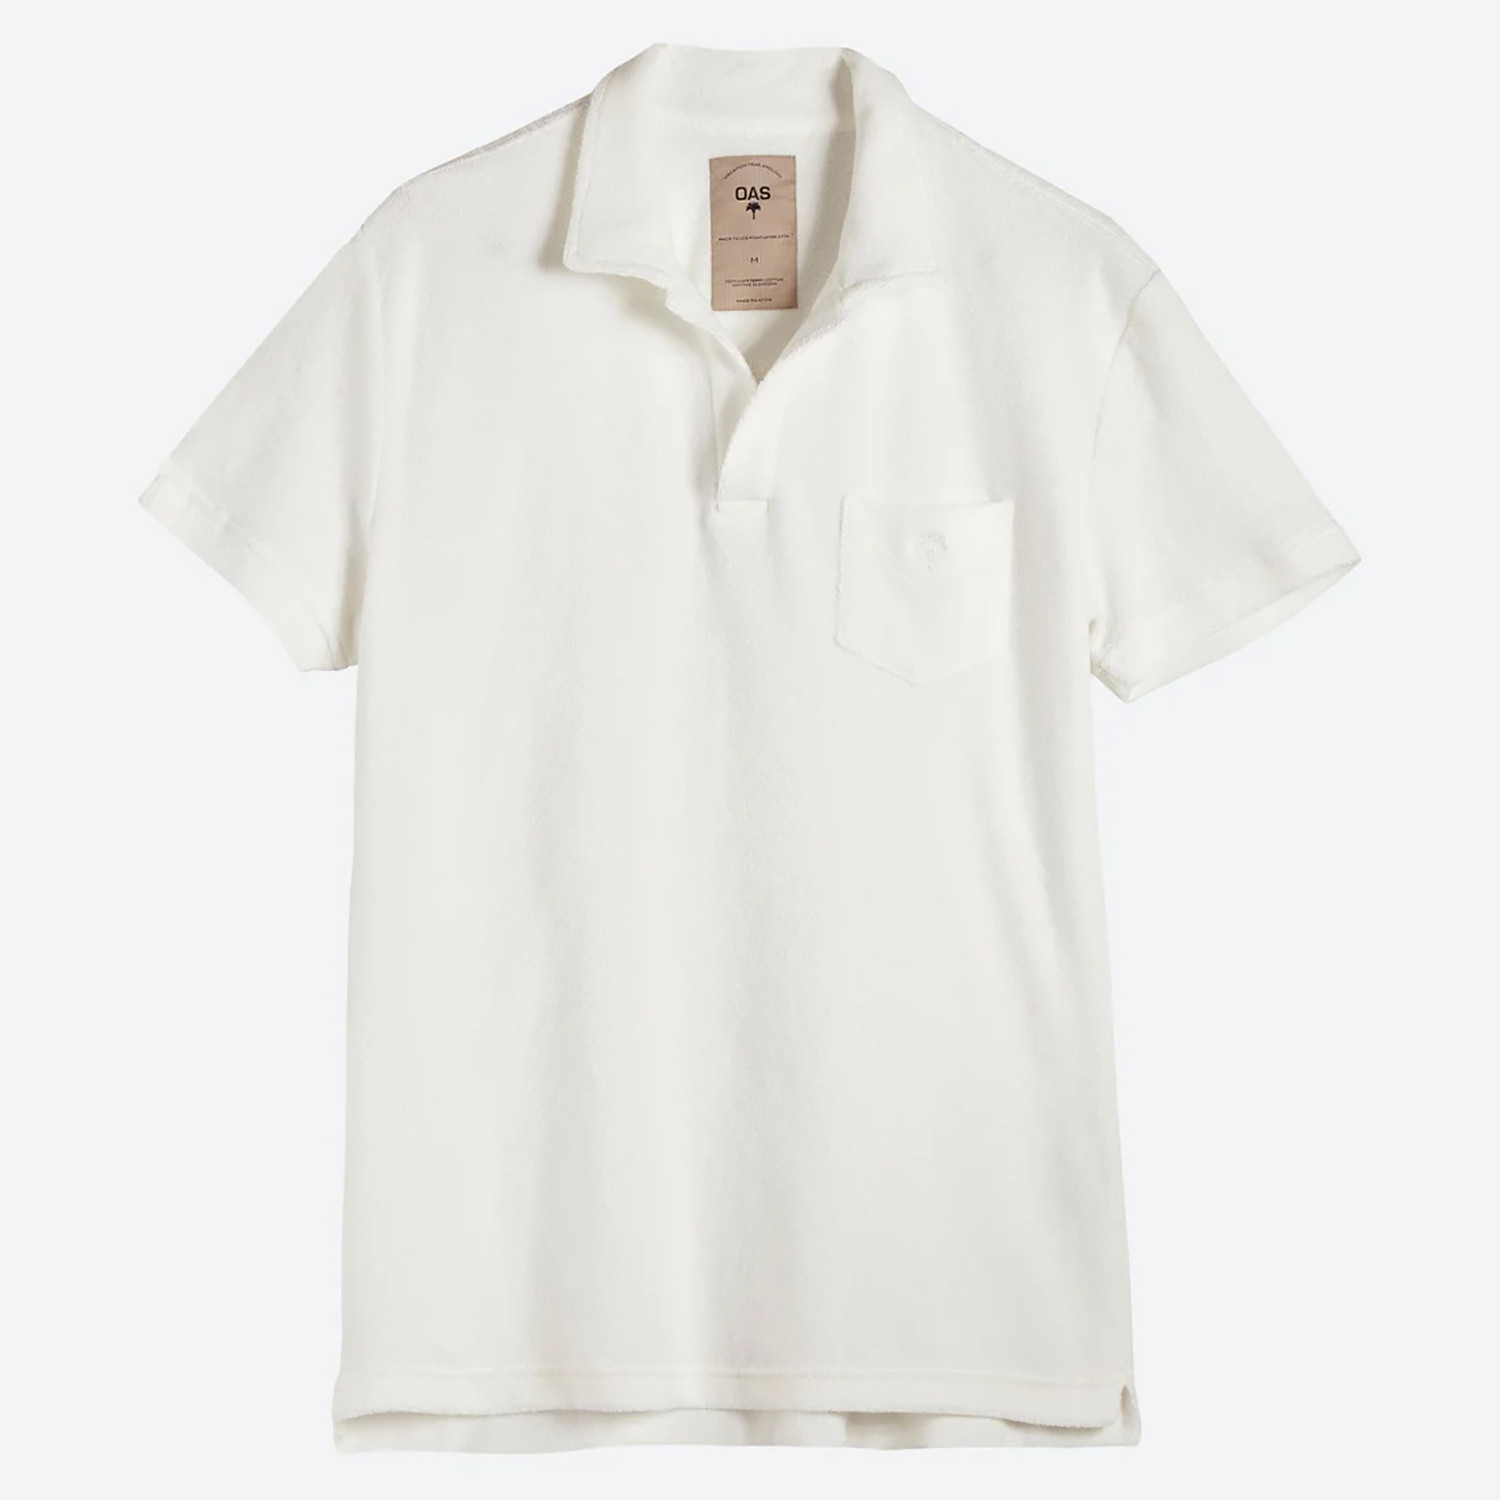 OAS Solid White Ανδρικό Polo T-shirt (9000079953_1539)